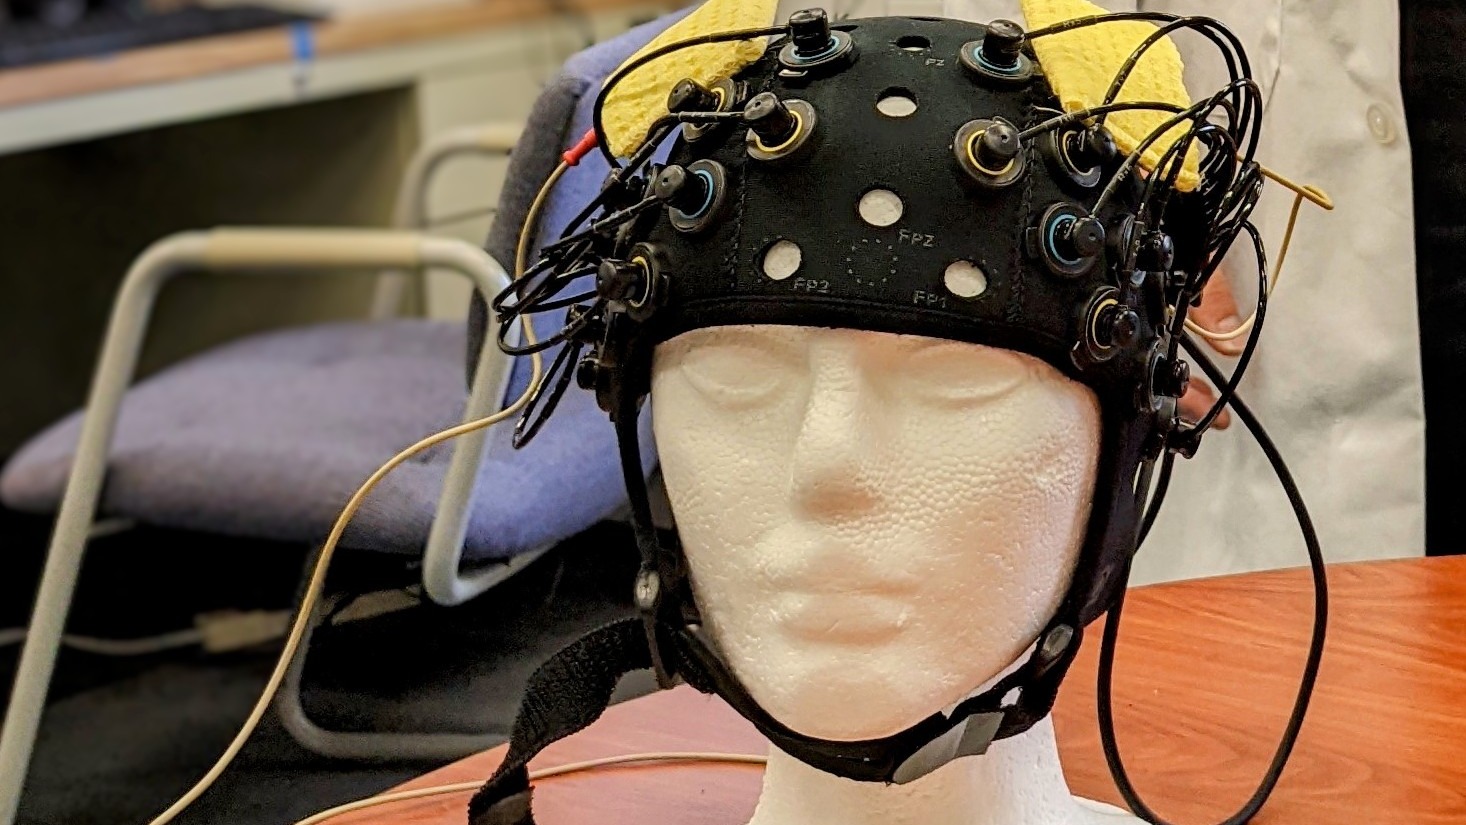 Transcranial direct current stimulation device